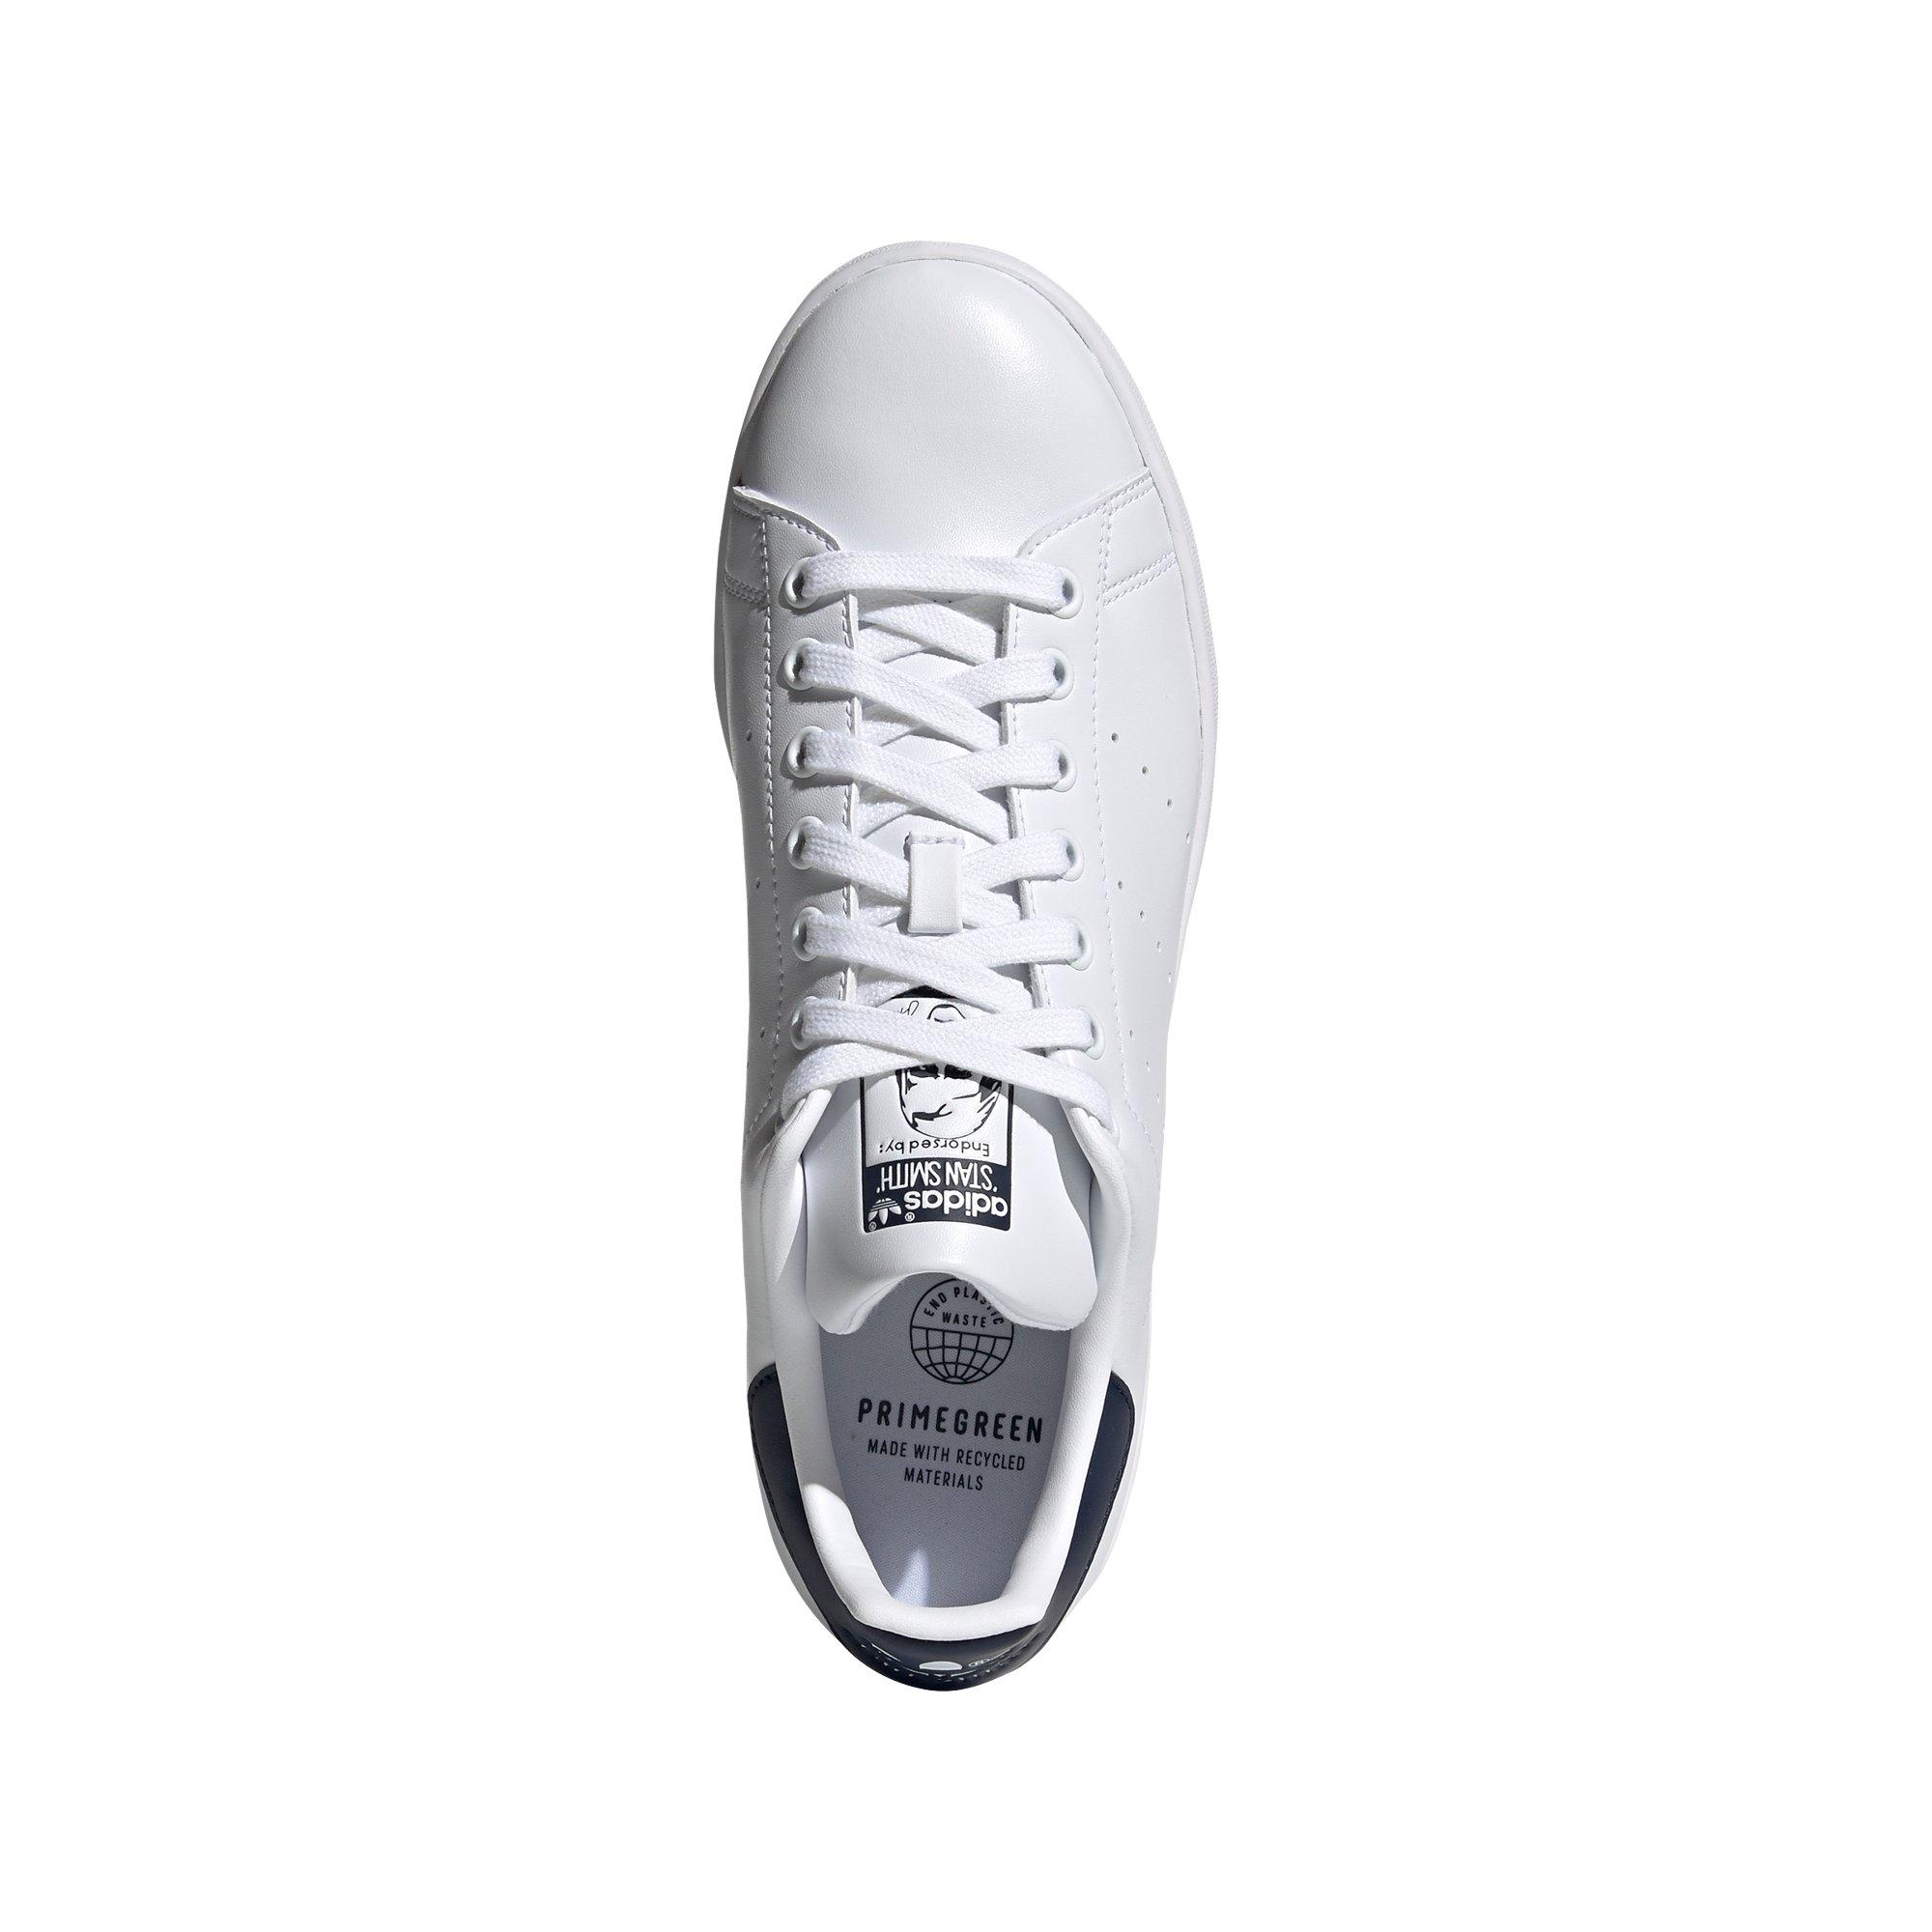 Adidas Originals Stan Smith - Mens - White/Navy, Size 7.5